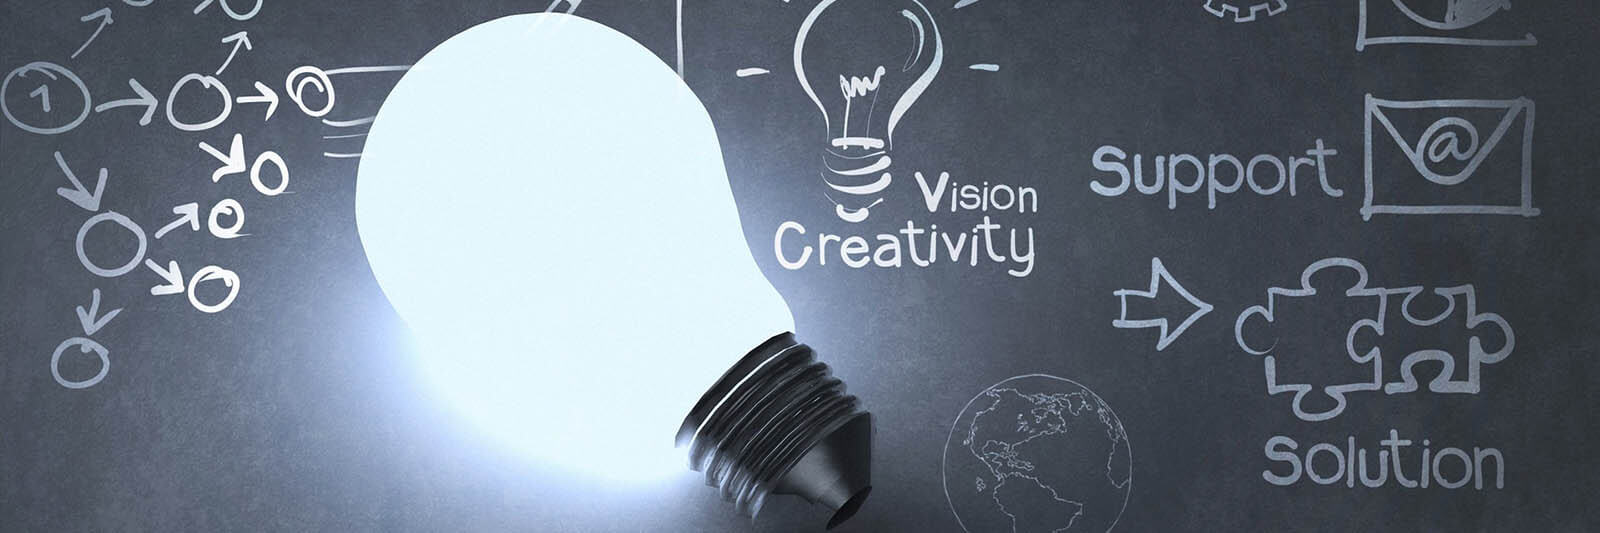 creativity and ideas